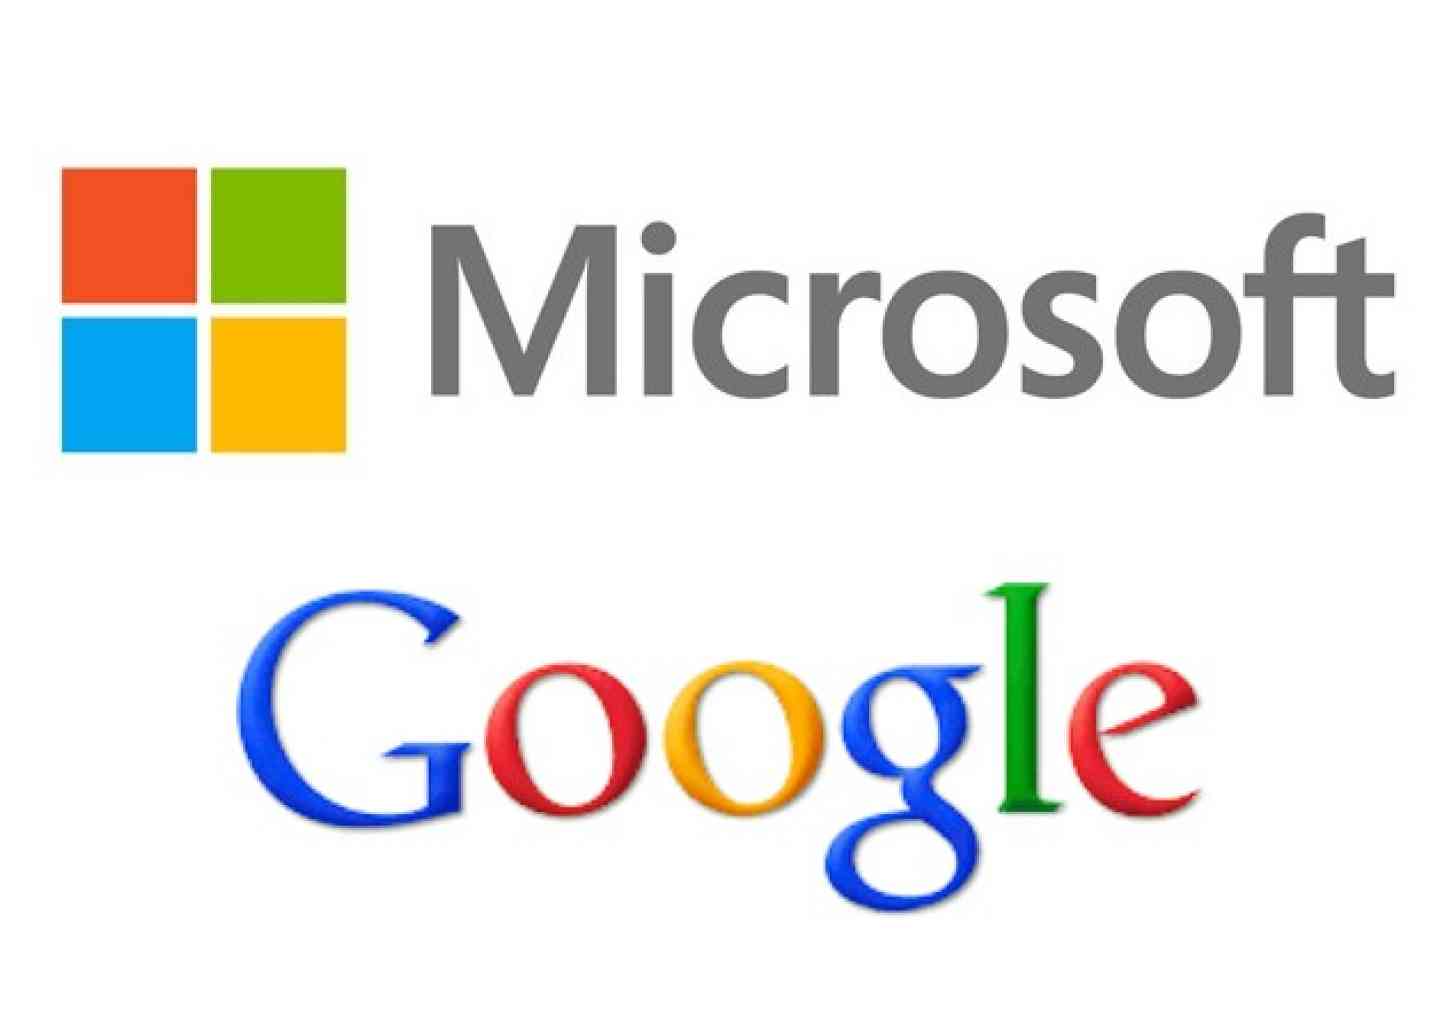 Microsoft and Google logos